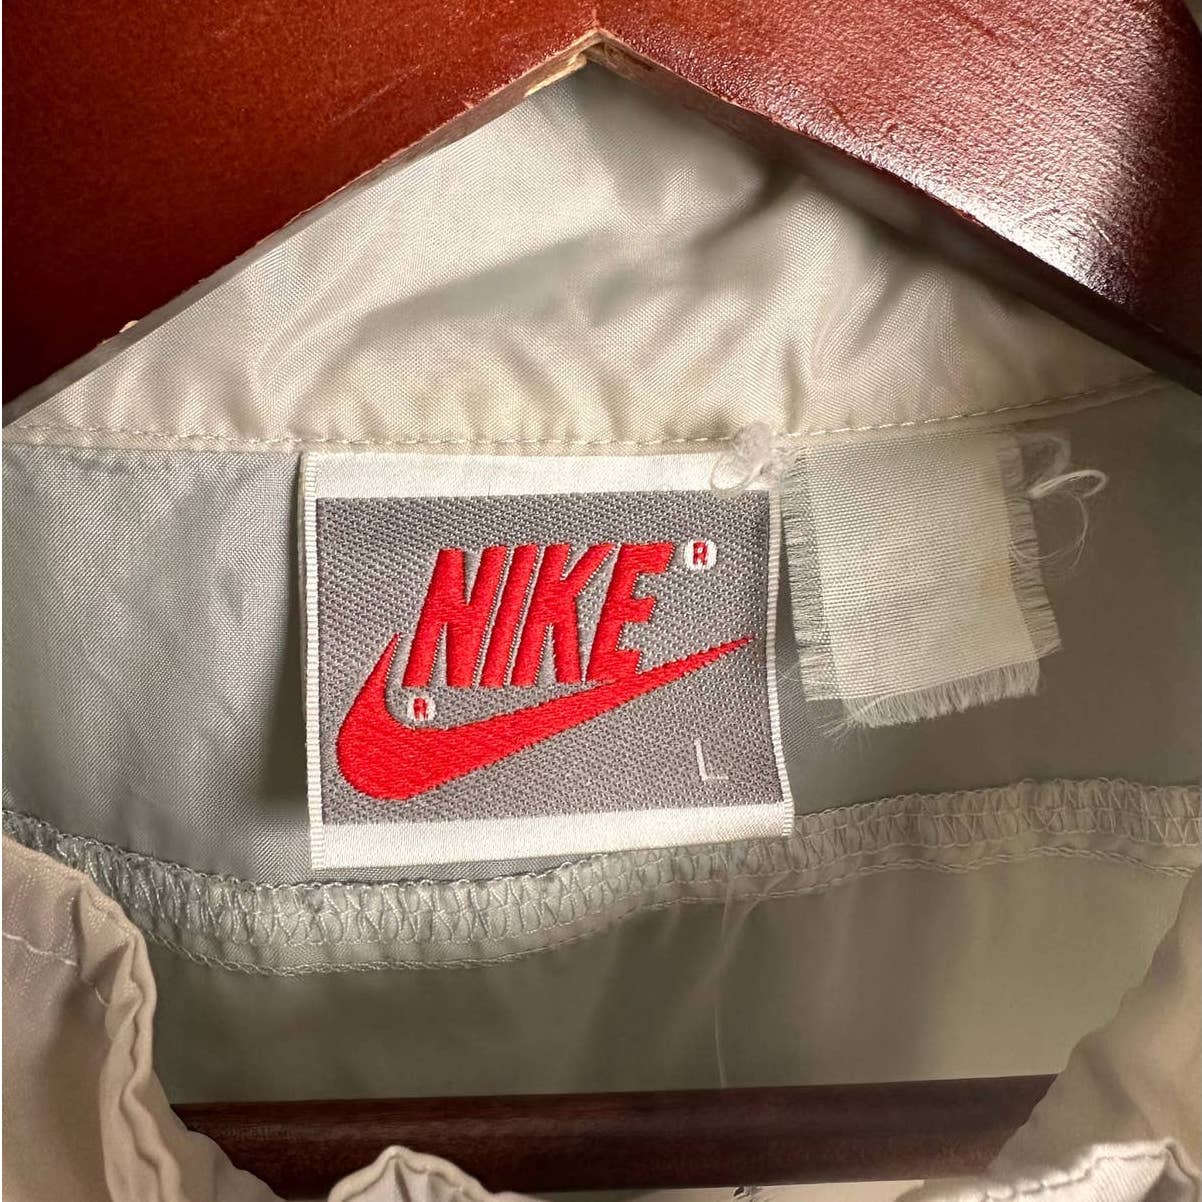 Vintage 80s Nike Quarter Zip Windbreaker Jacket L